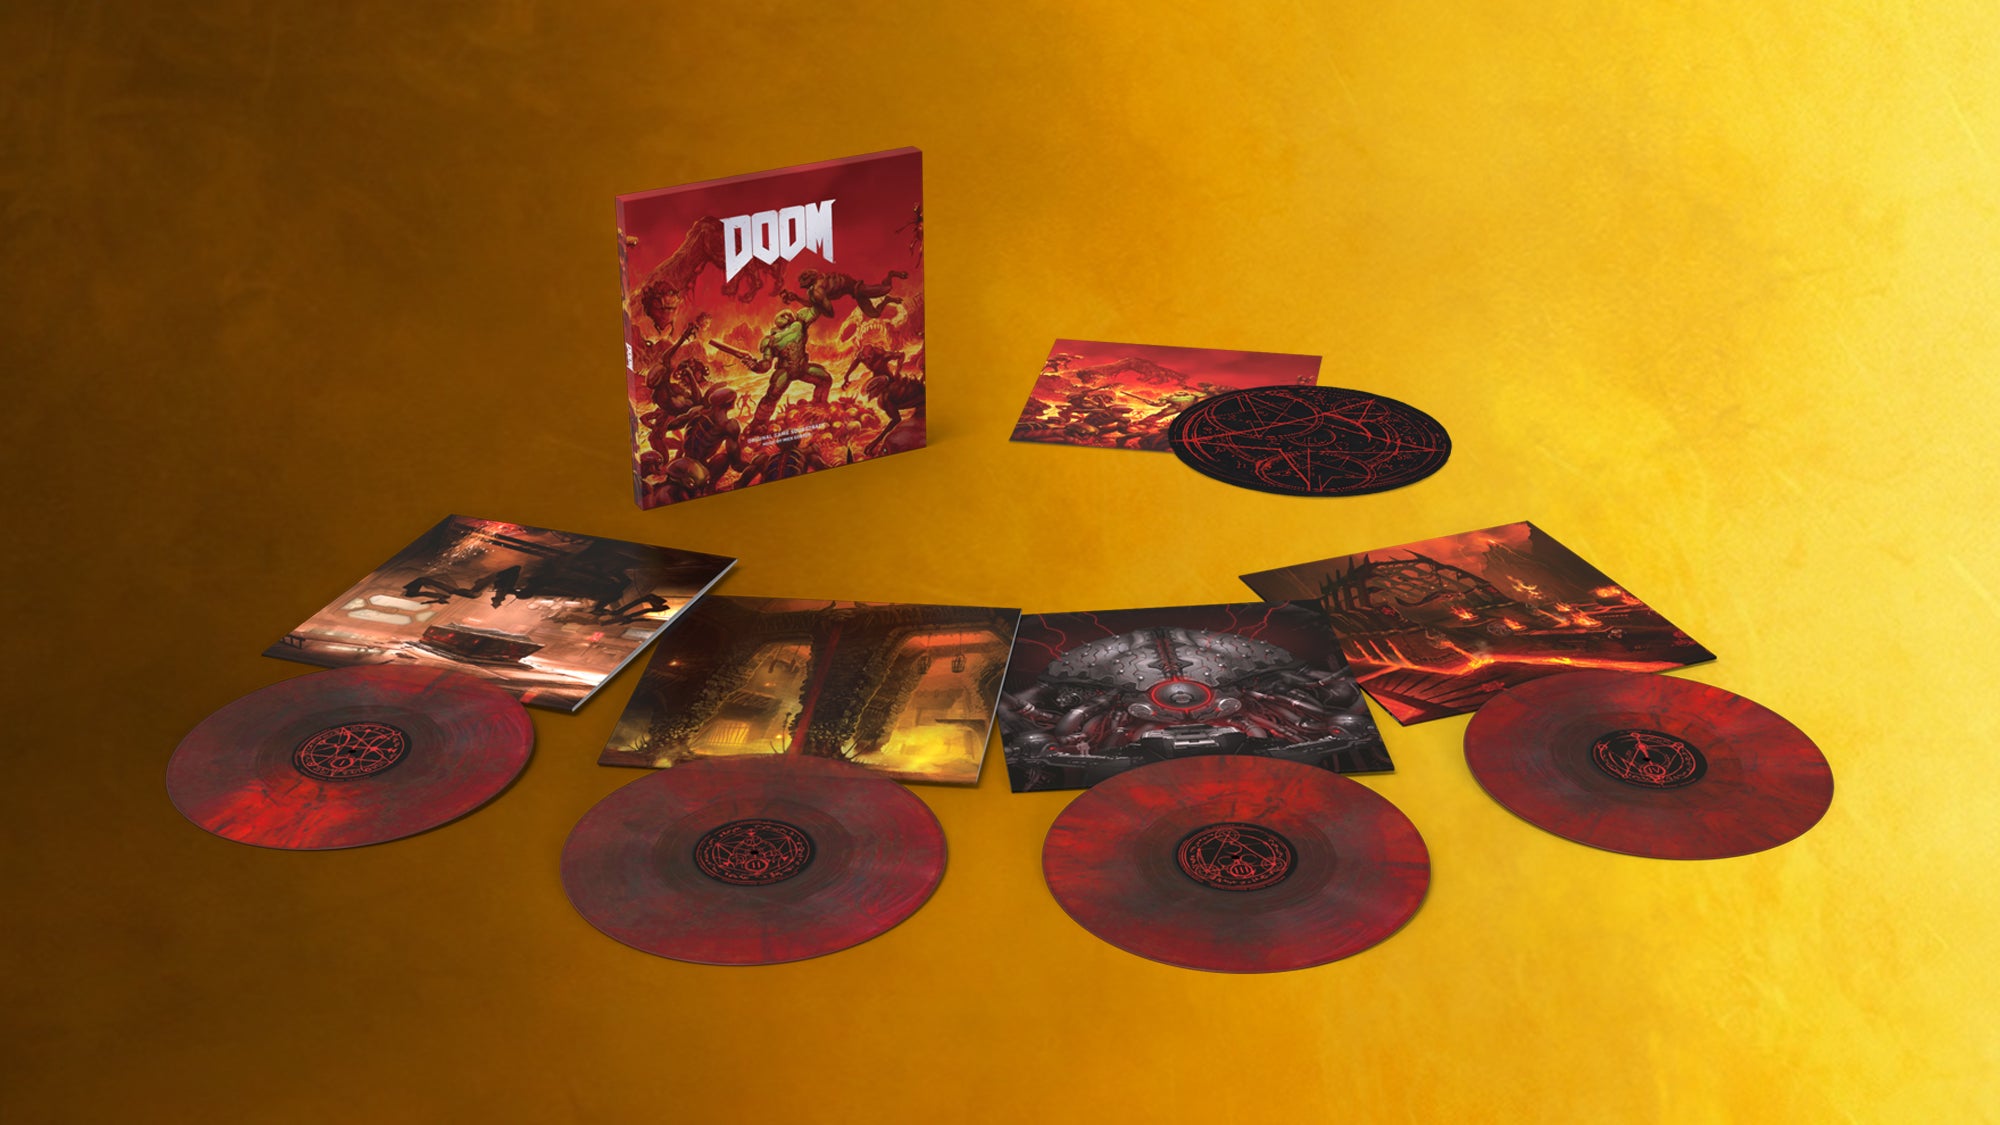 The Doom (2016) 5th Anniversary Limited Edition vinyl box set